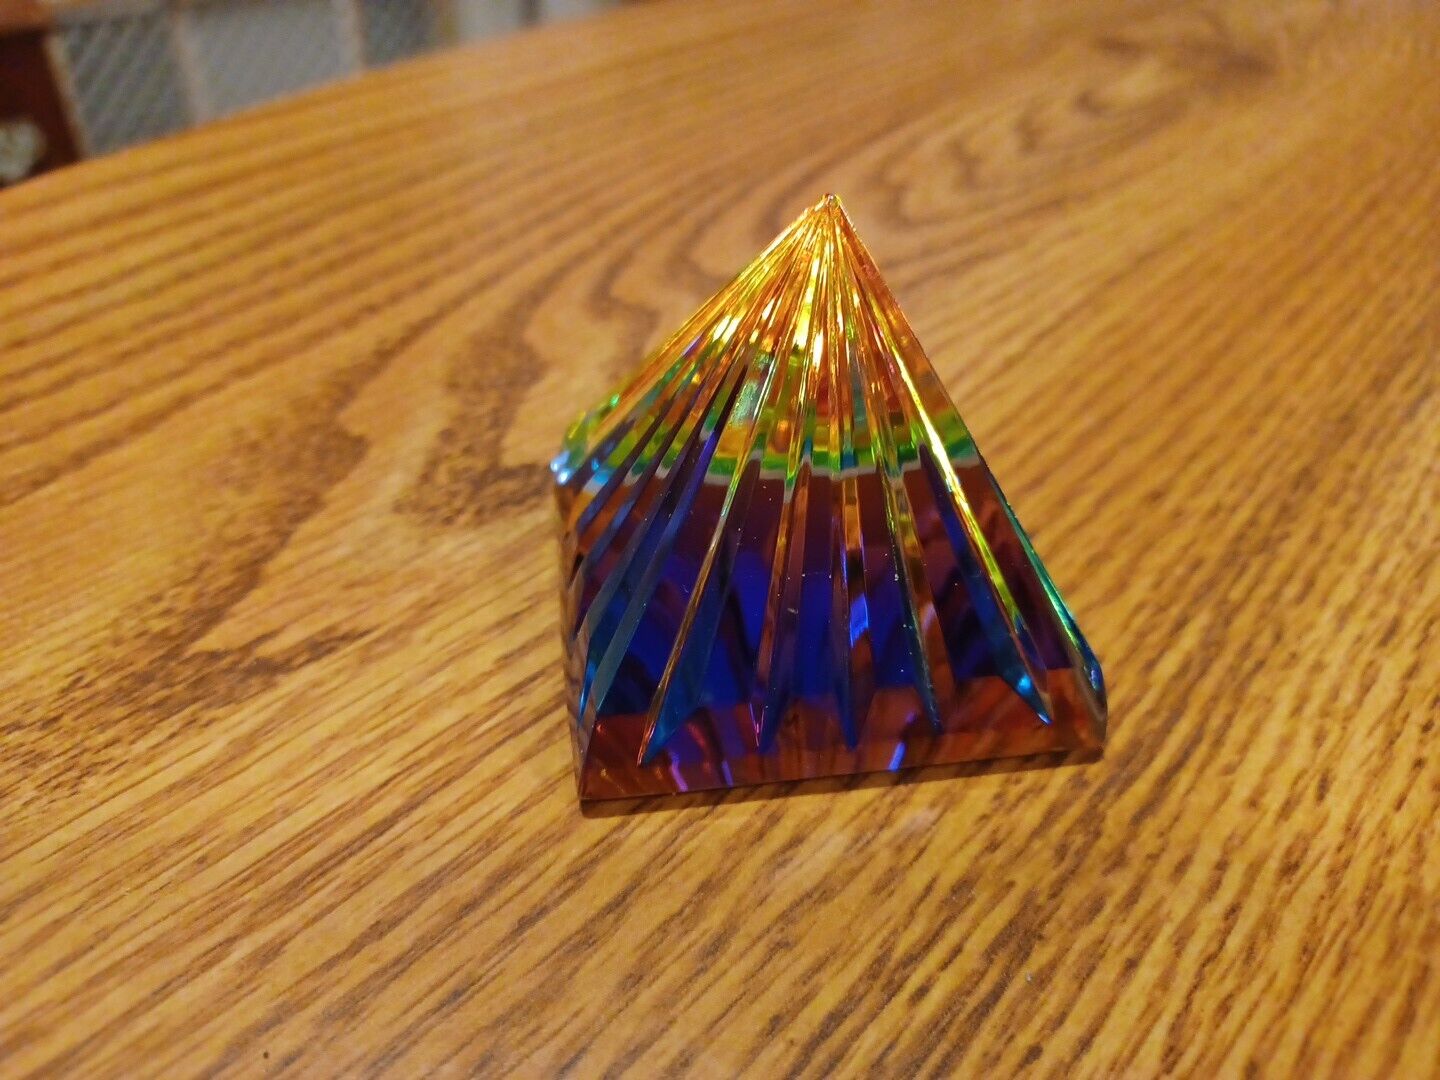 Swarovski Crystal 2 Inch Pyramid Prism Paperweight Sun Catcher Rainbow Pyramid